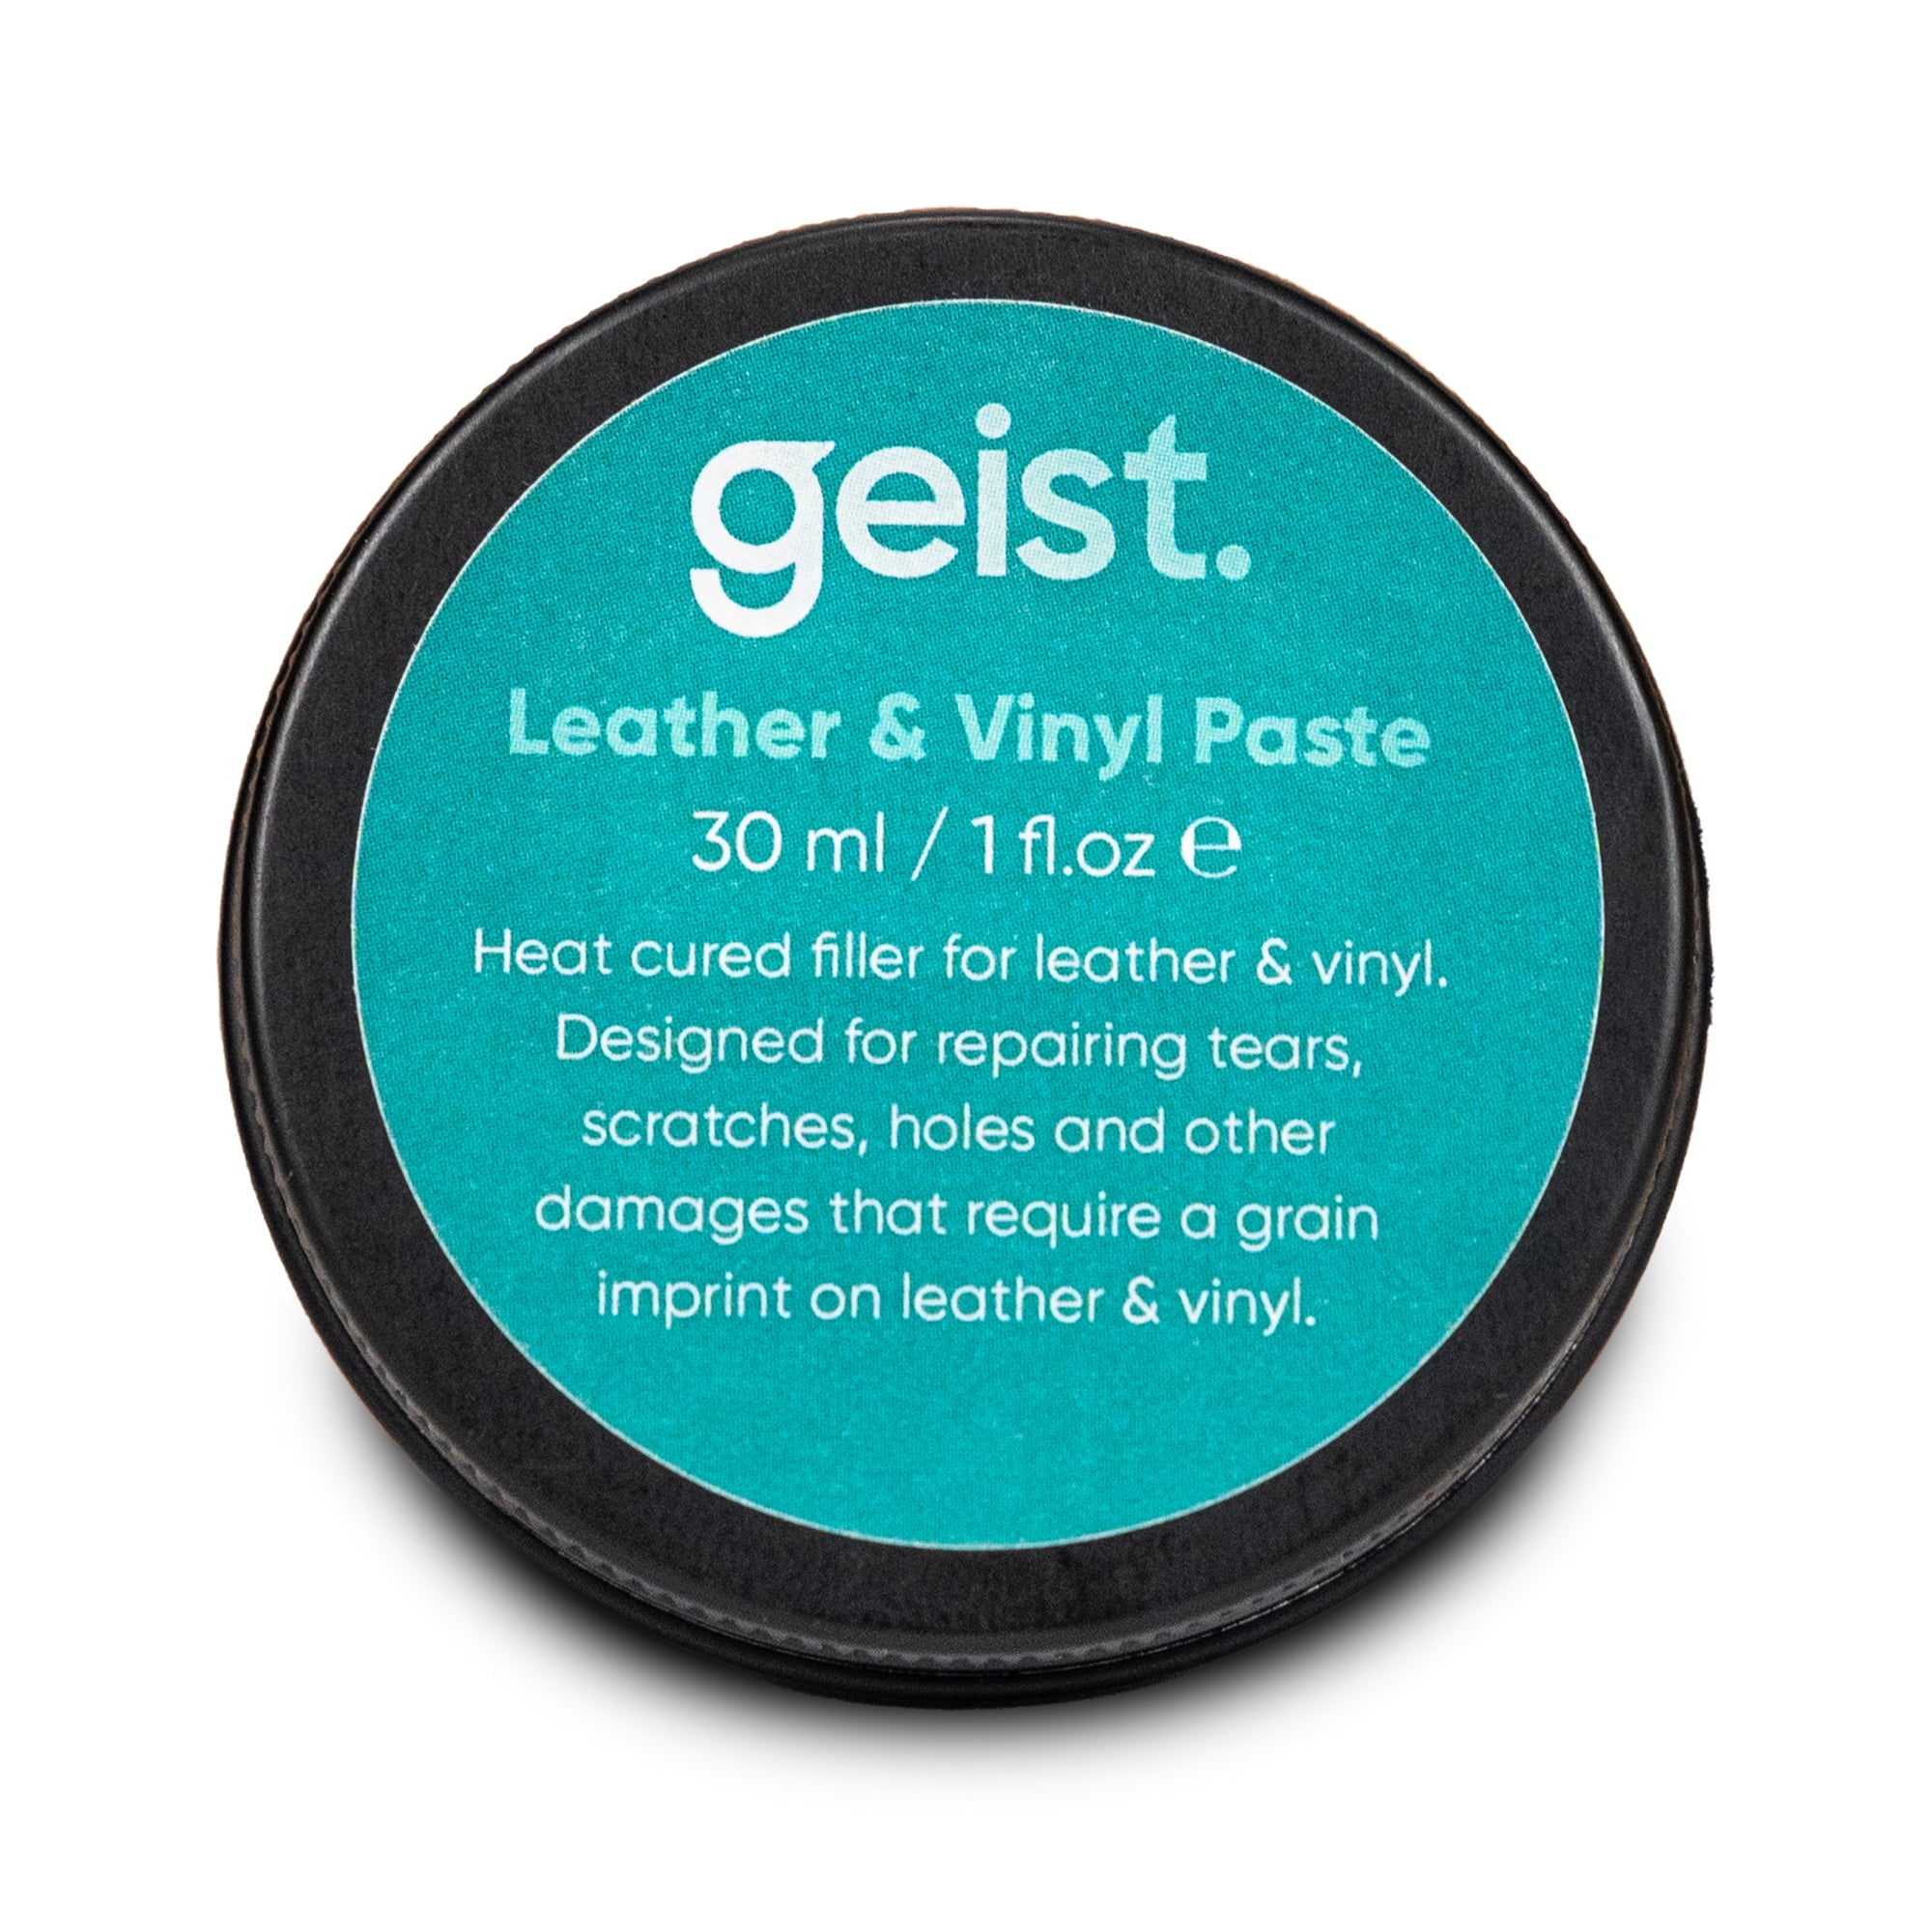 Geist. Leather & Vinyl Paste, Heat cured filler for leather & vinyl